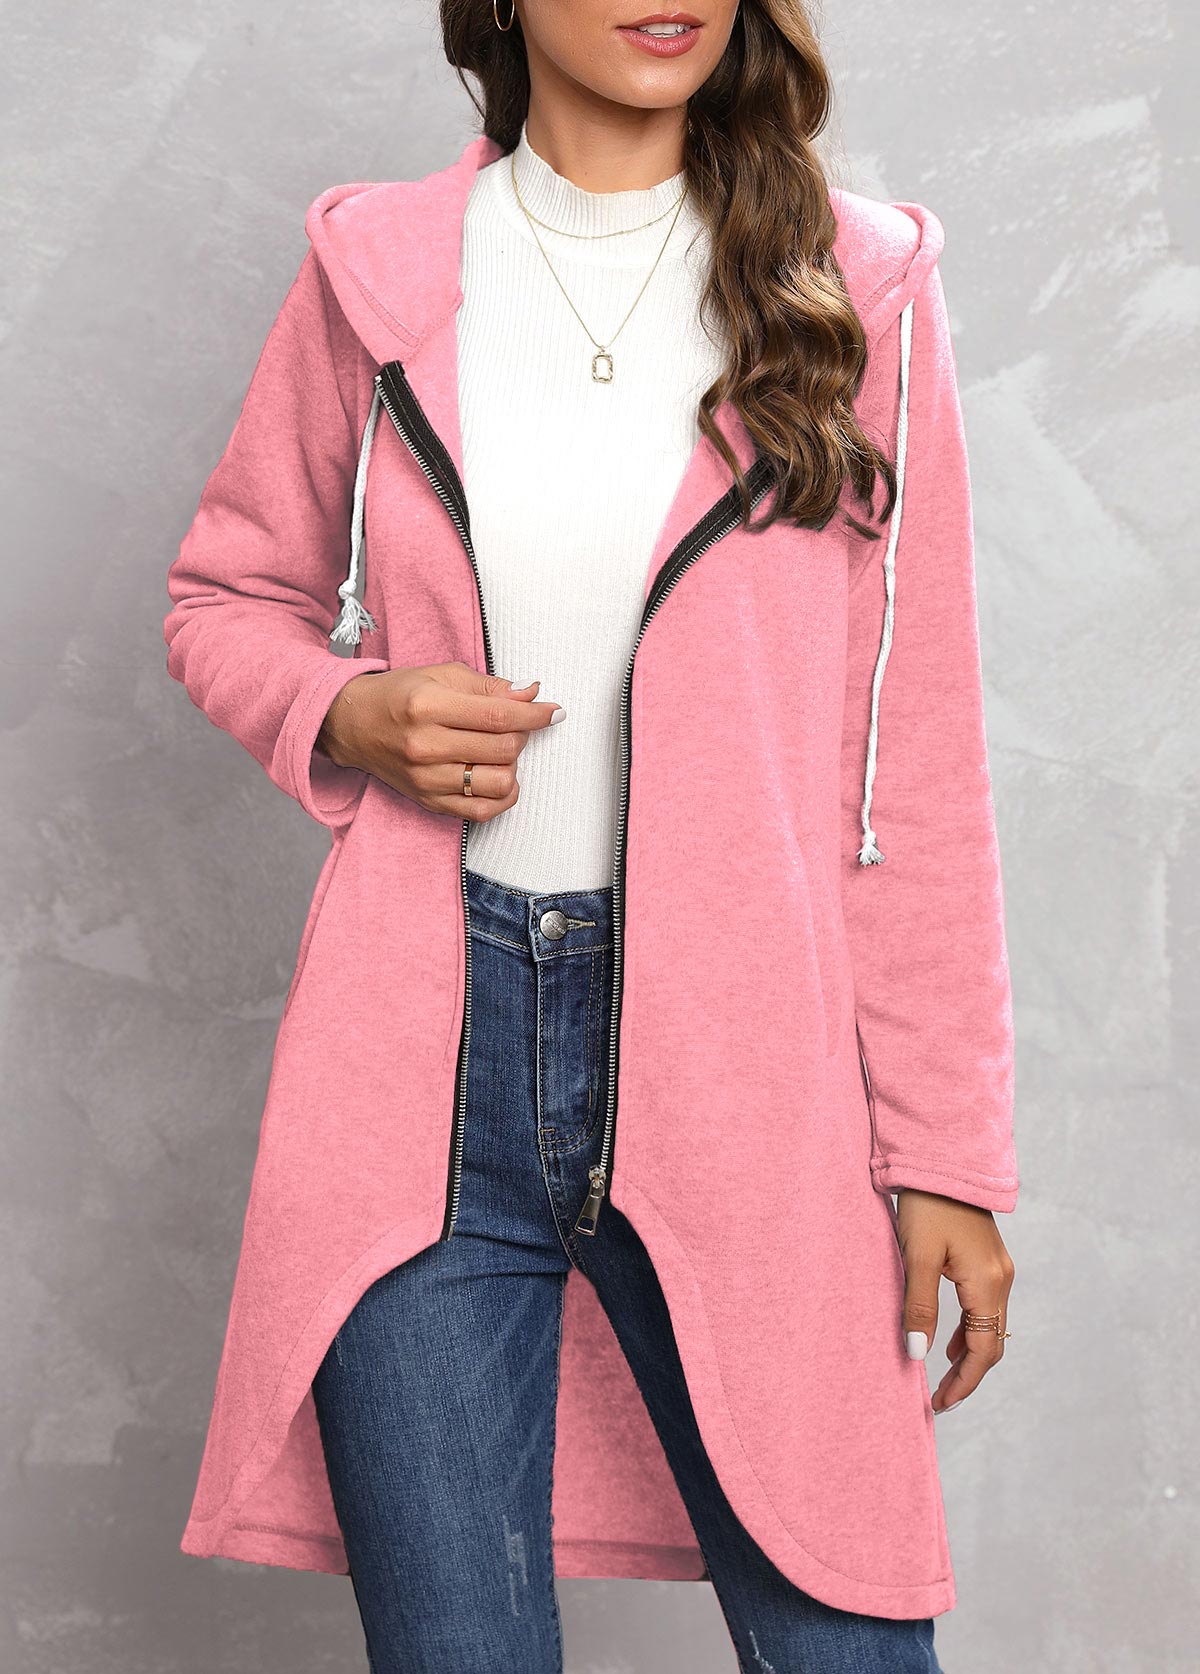 Zipper Hooded Long Sleeve Pink Coat